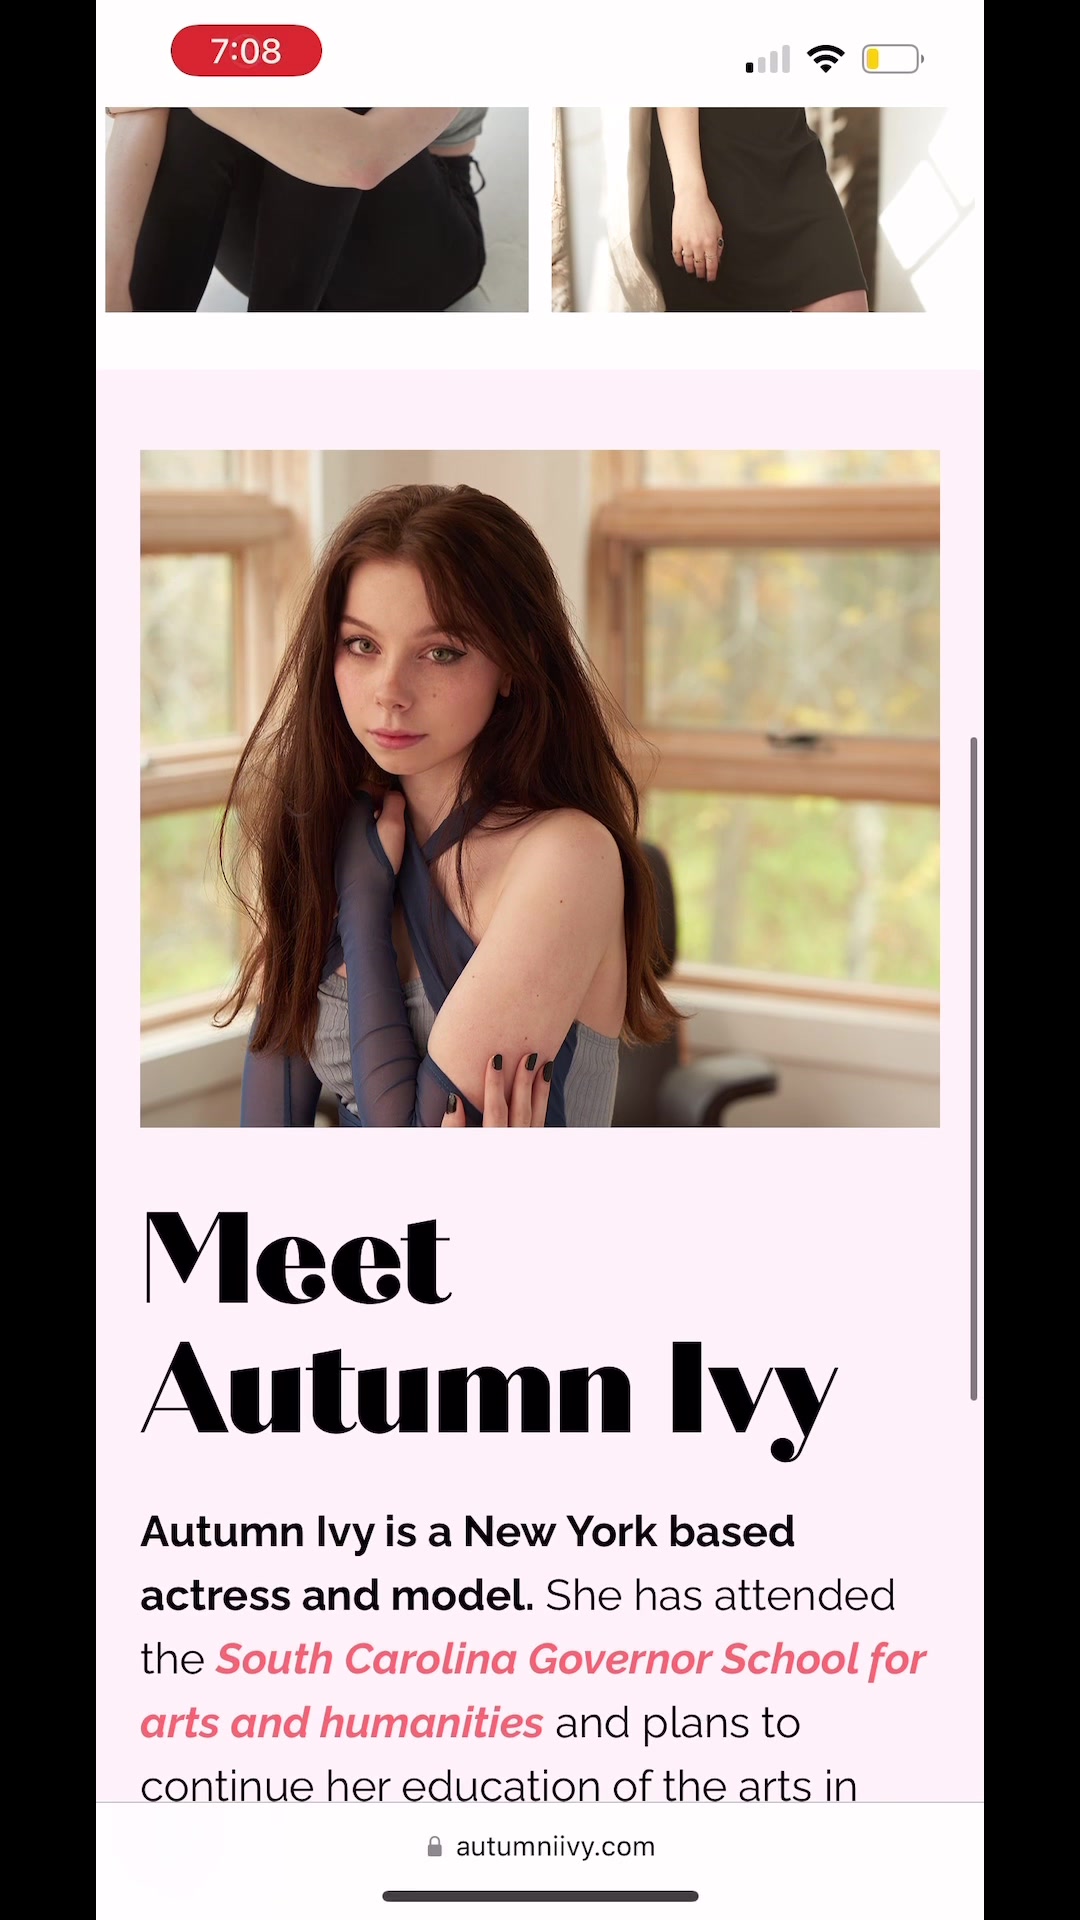 @autumn ivy